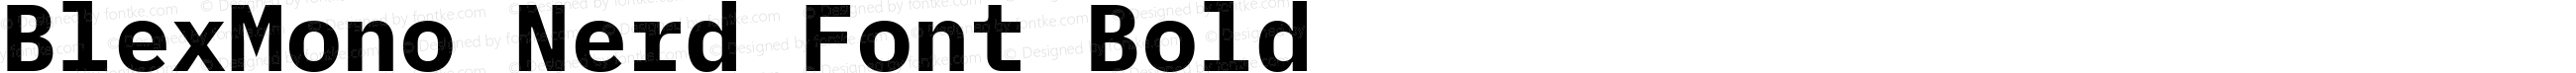 Blex Mono Bold Nerd Font Complete